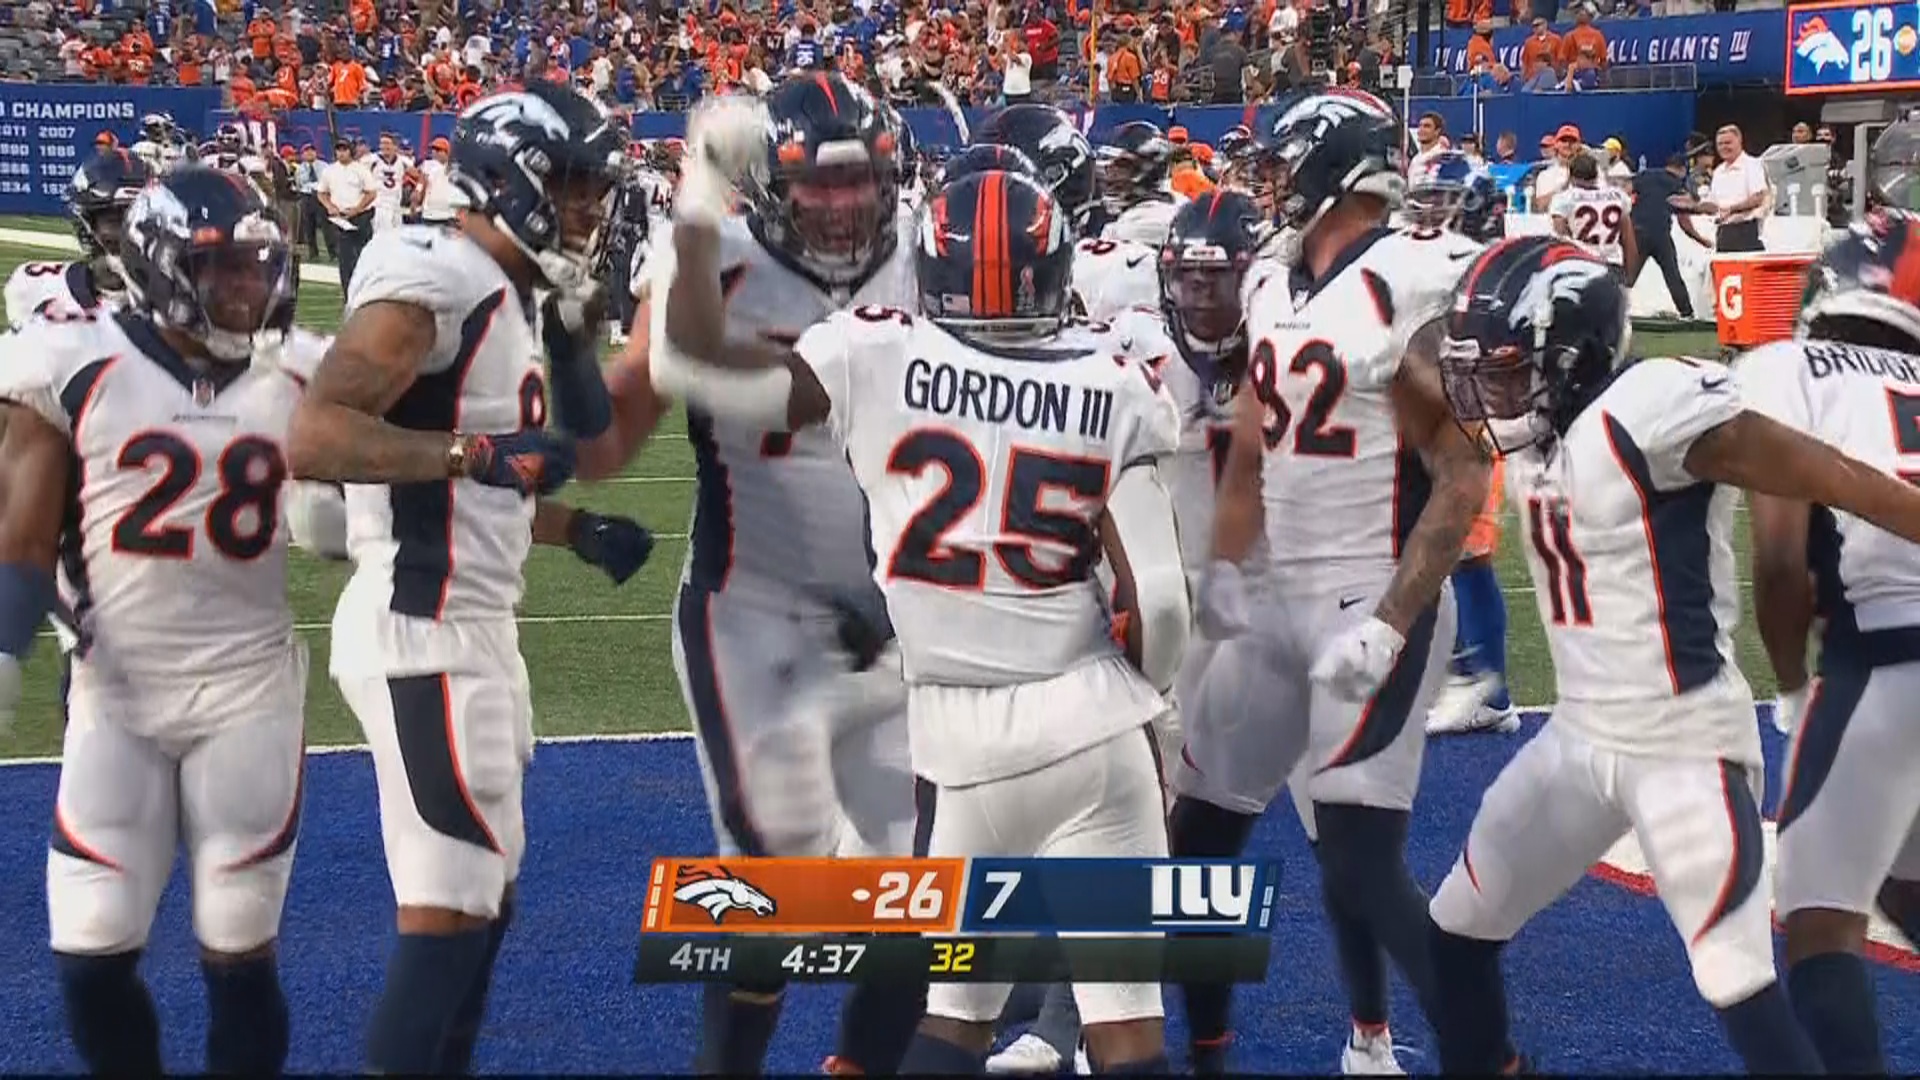 WATCH: Broncos' Melvin Gordon's 65-yard run against Chiefs – The Denver Post